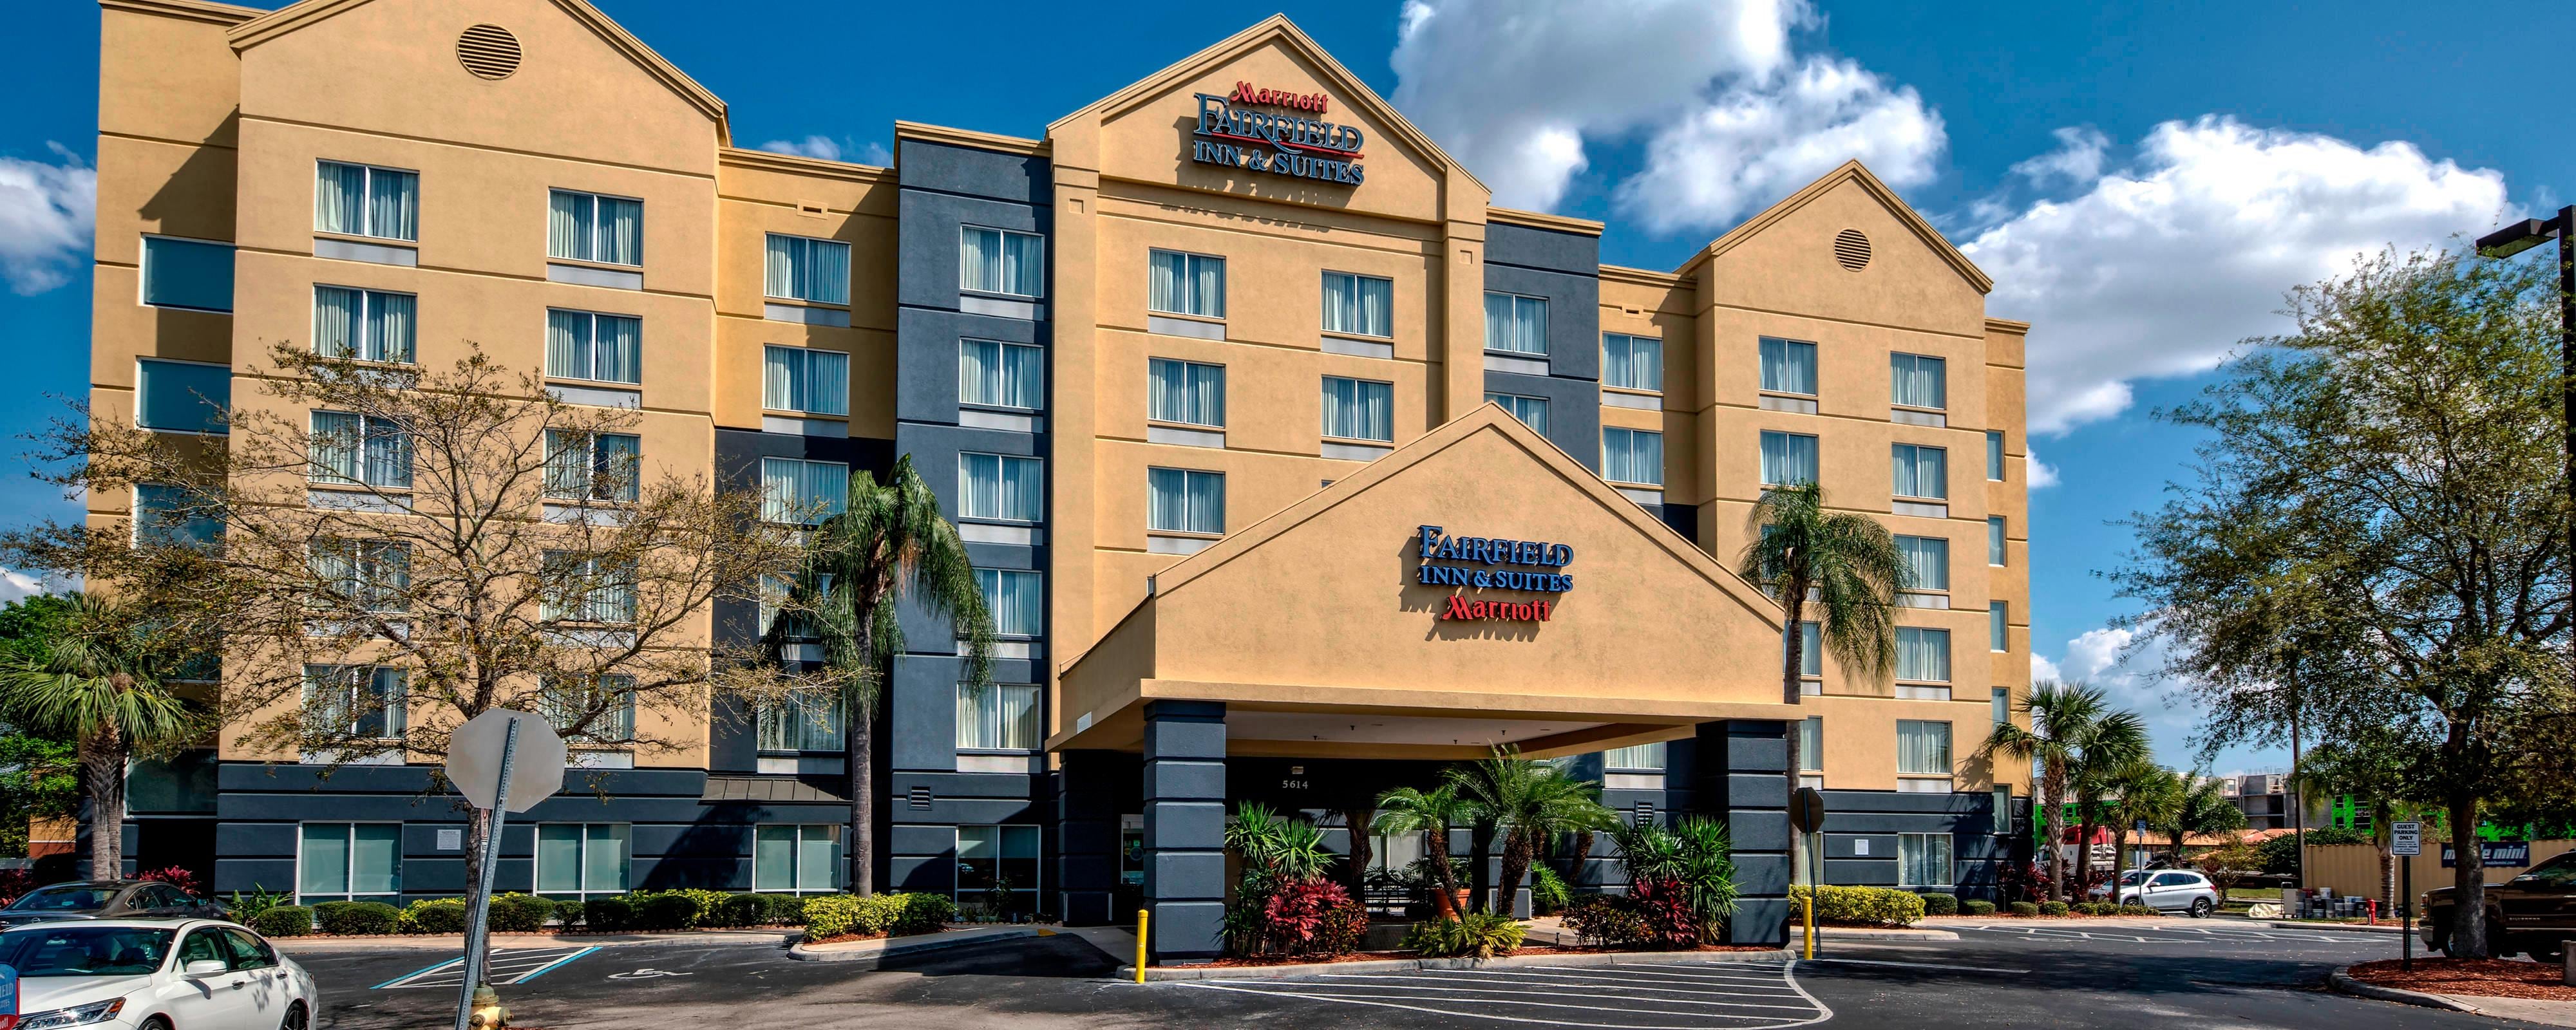 Hotels Near Universal Studios Orlando - prodesign-kw